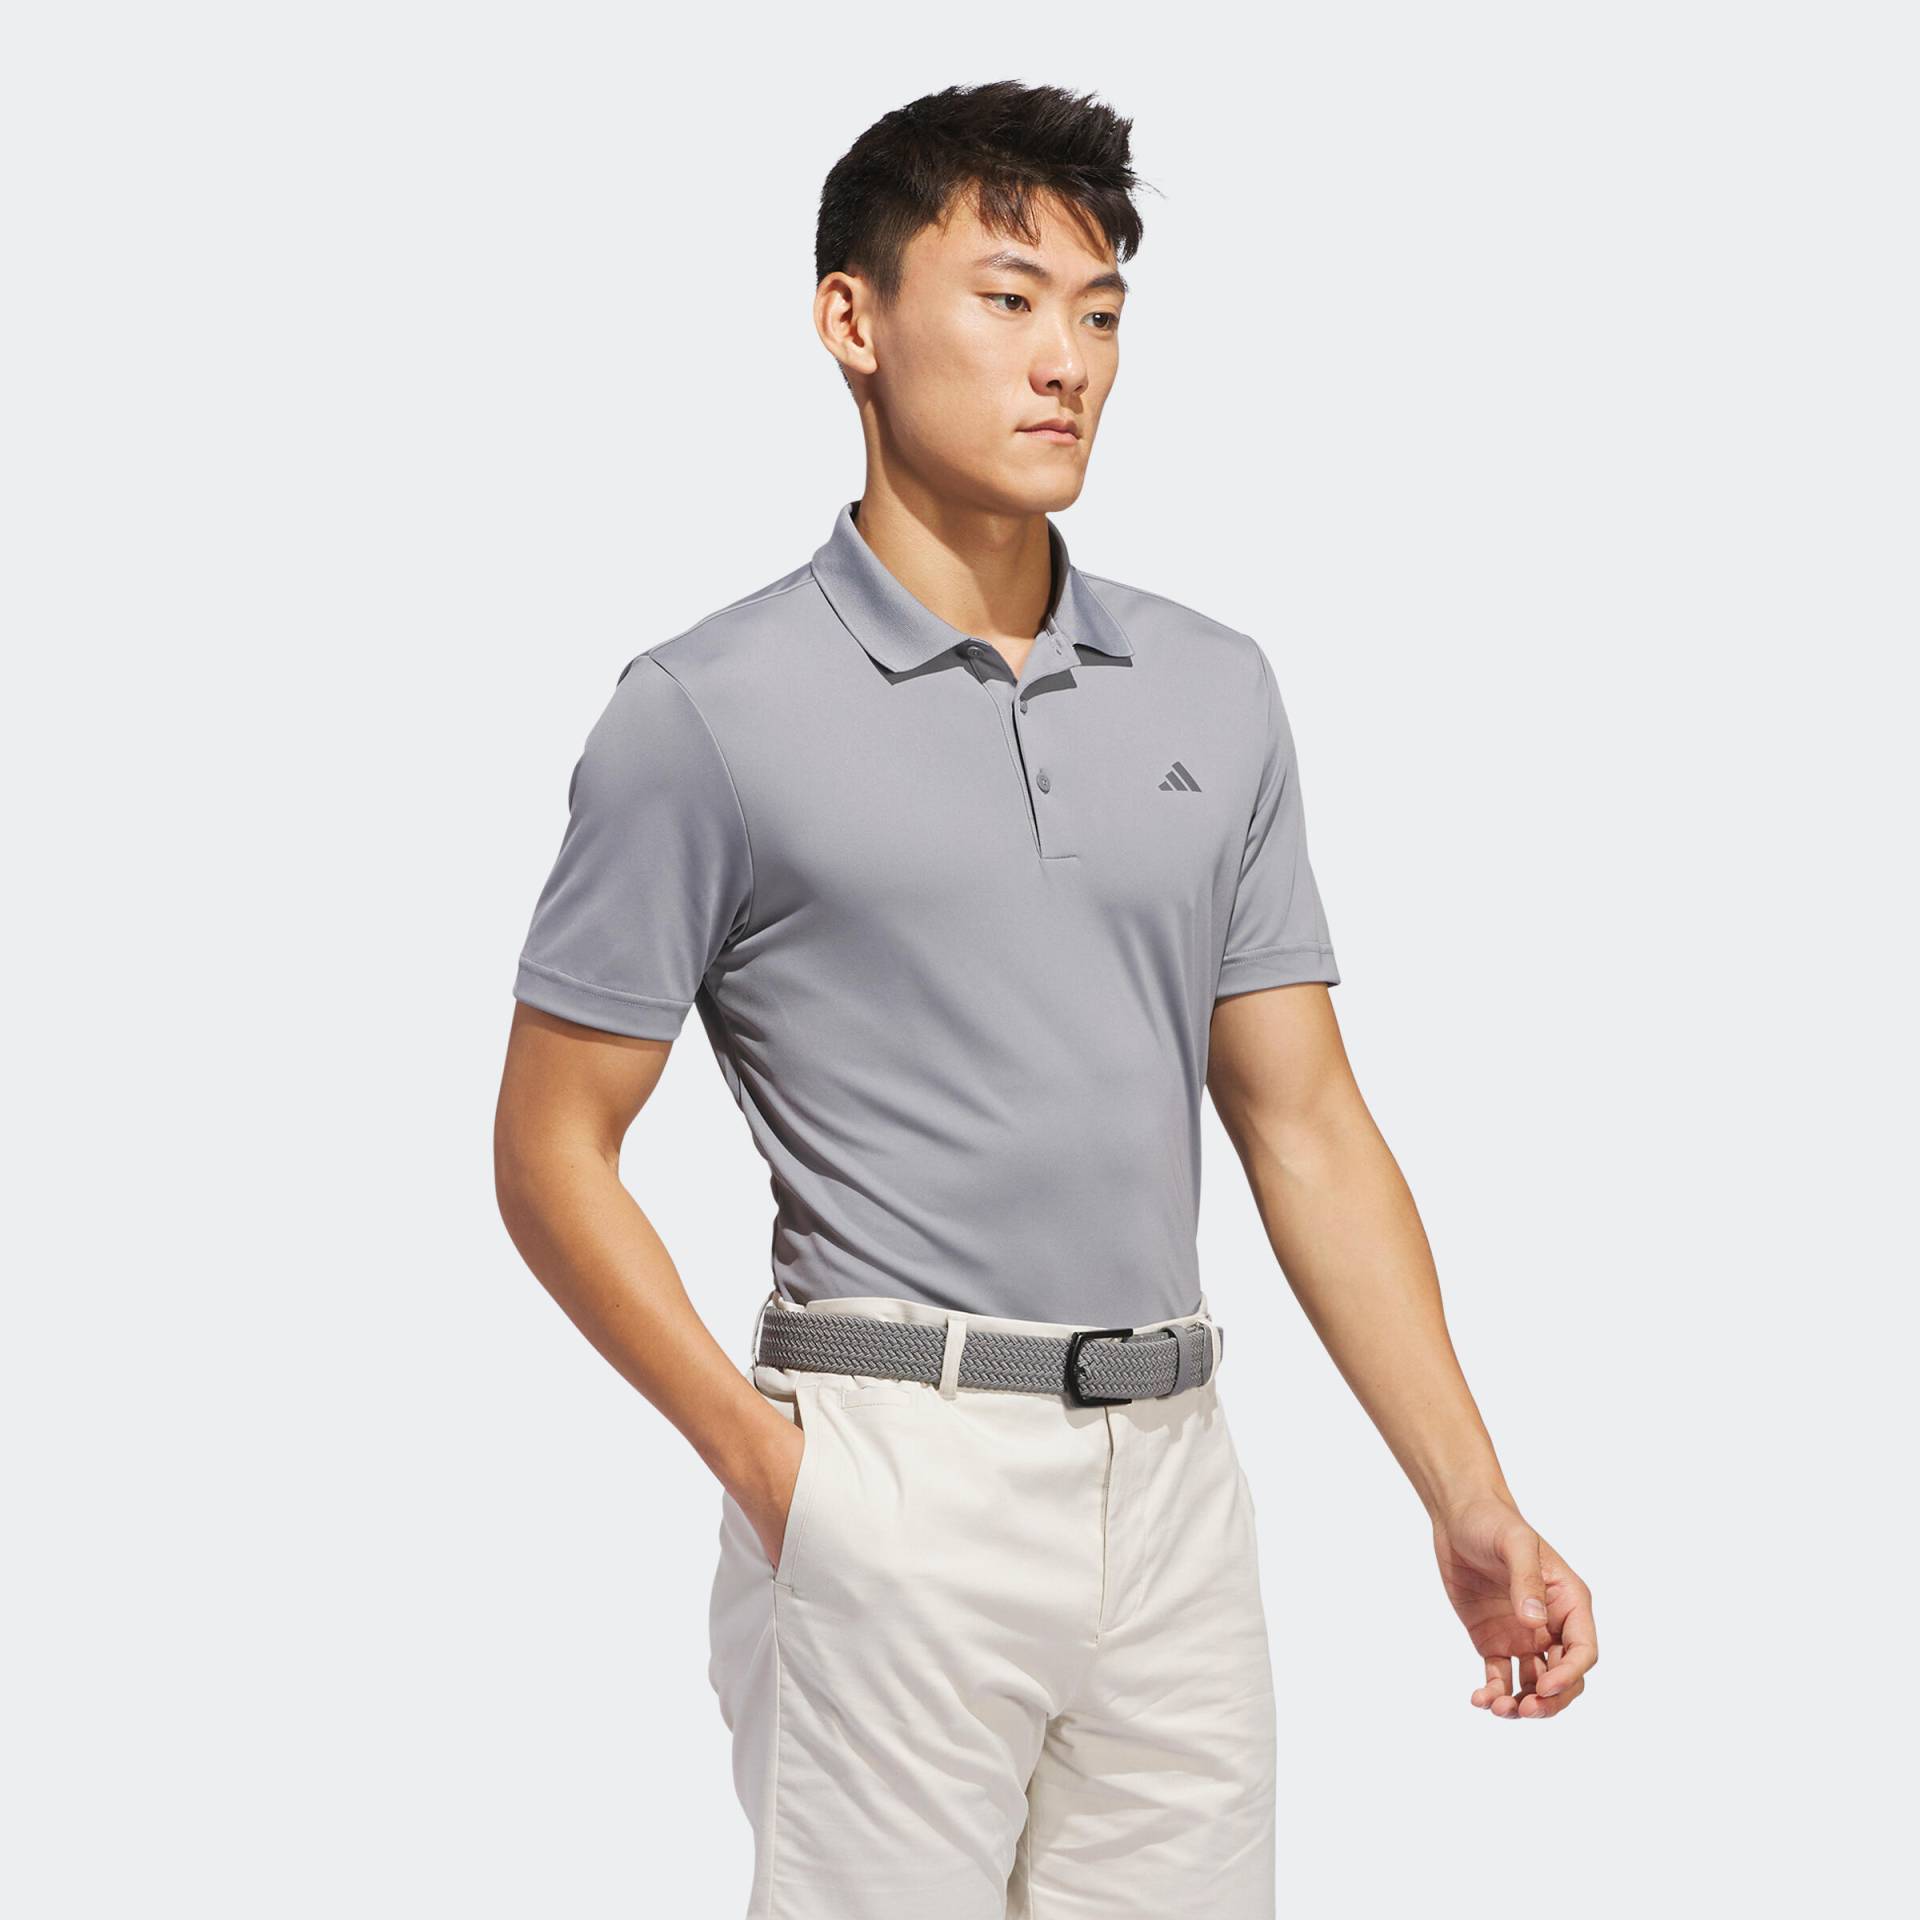 Herren Golf Poloshirt kurzarm - ADIDAS grau von Adidas